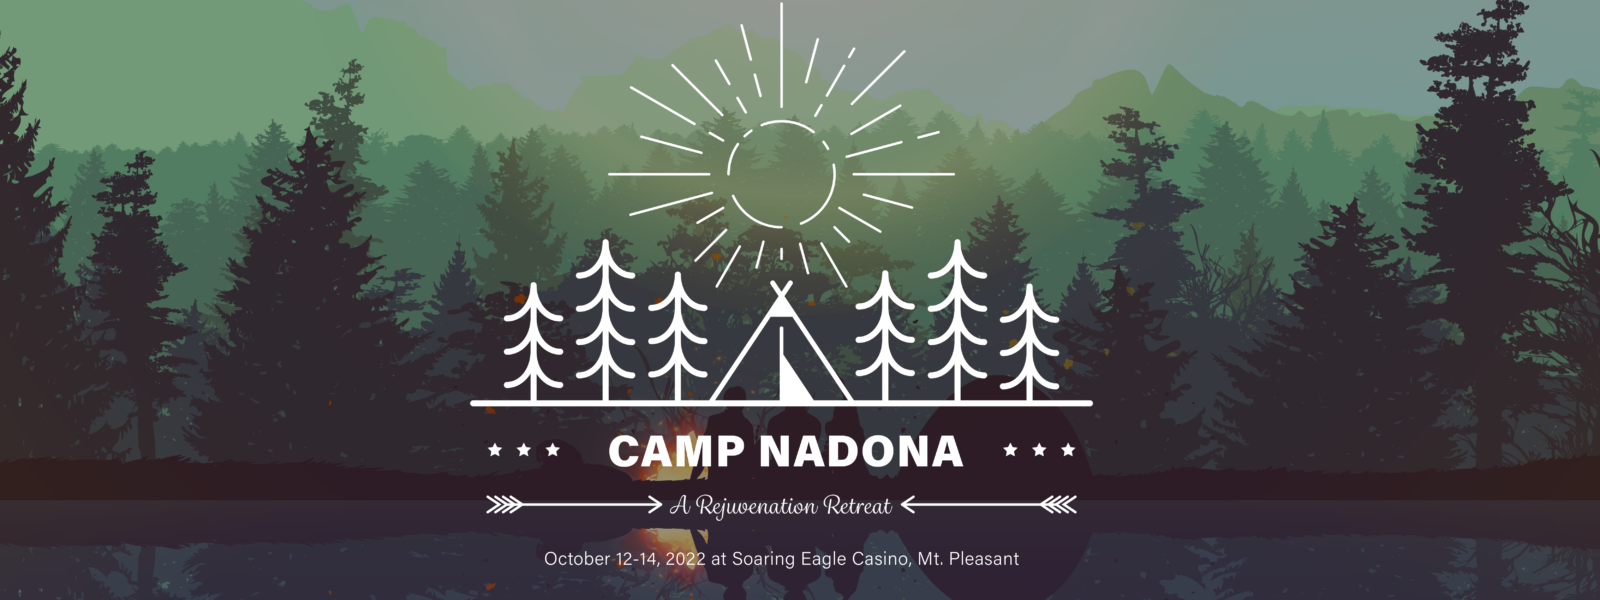 Camp NADONA Rejuvenation Retreat